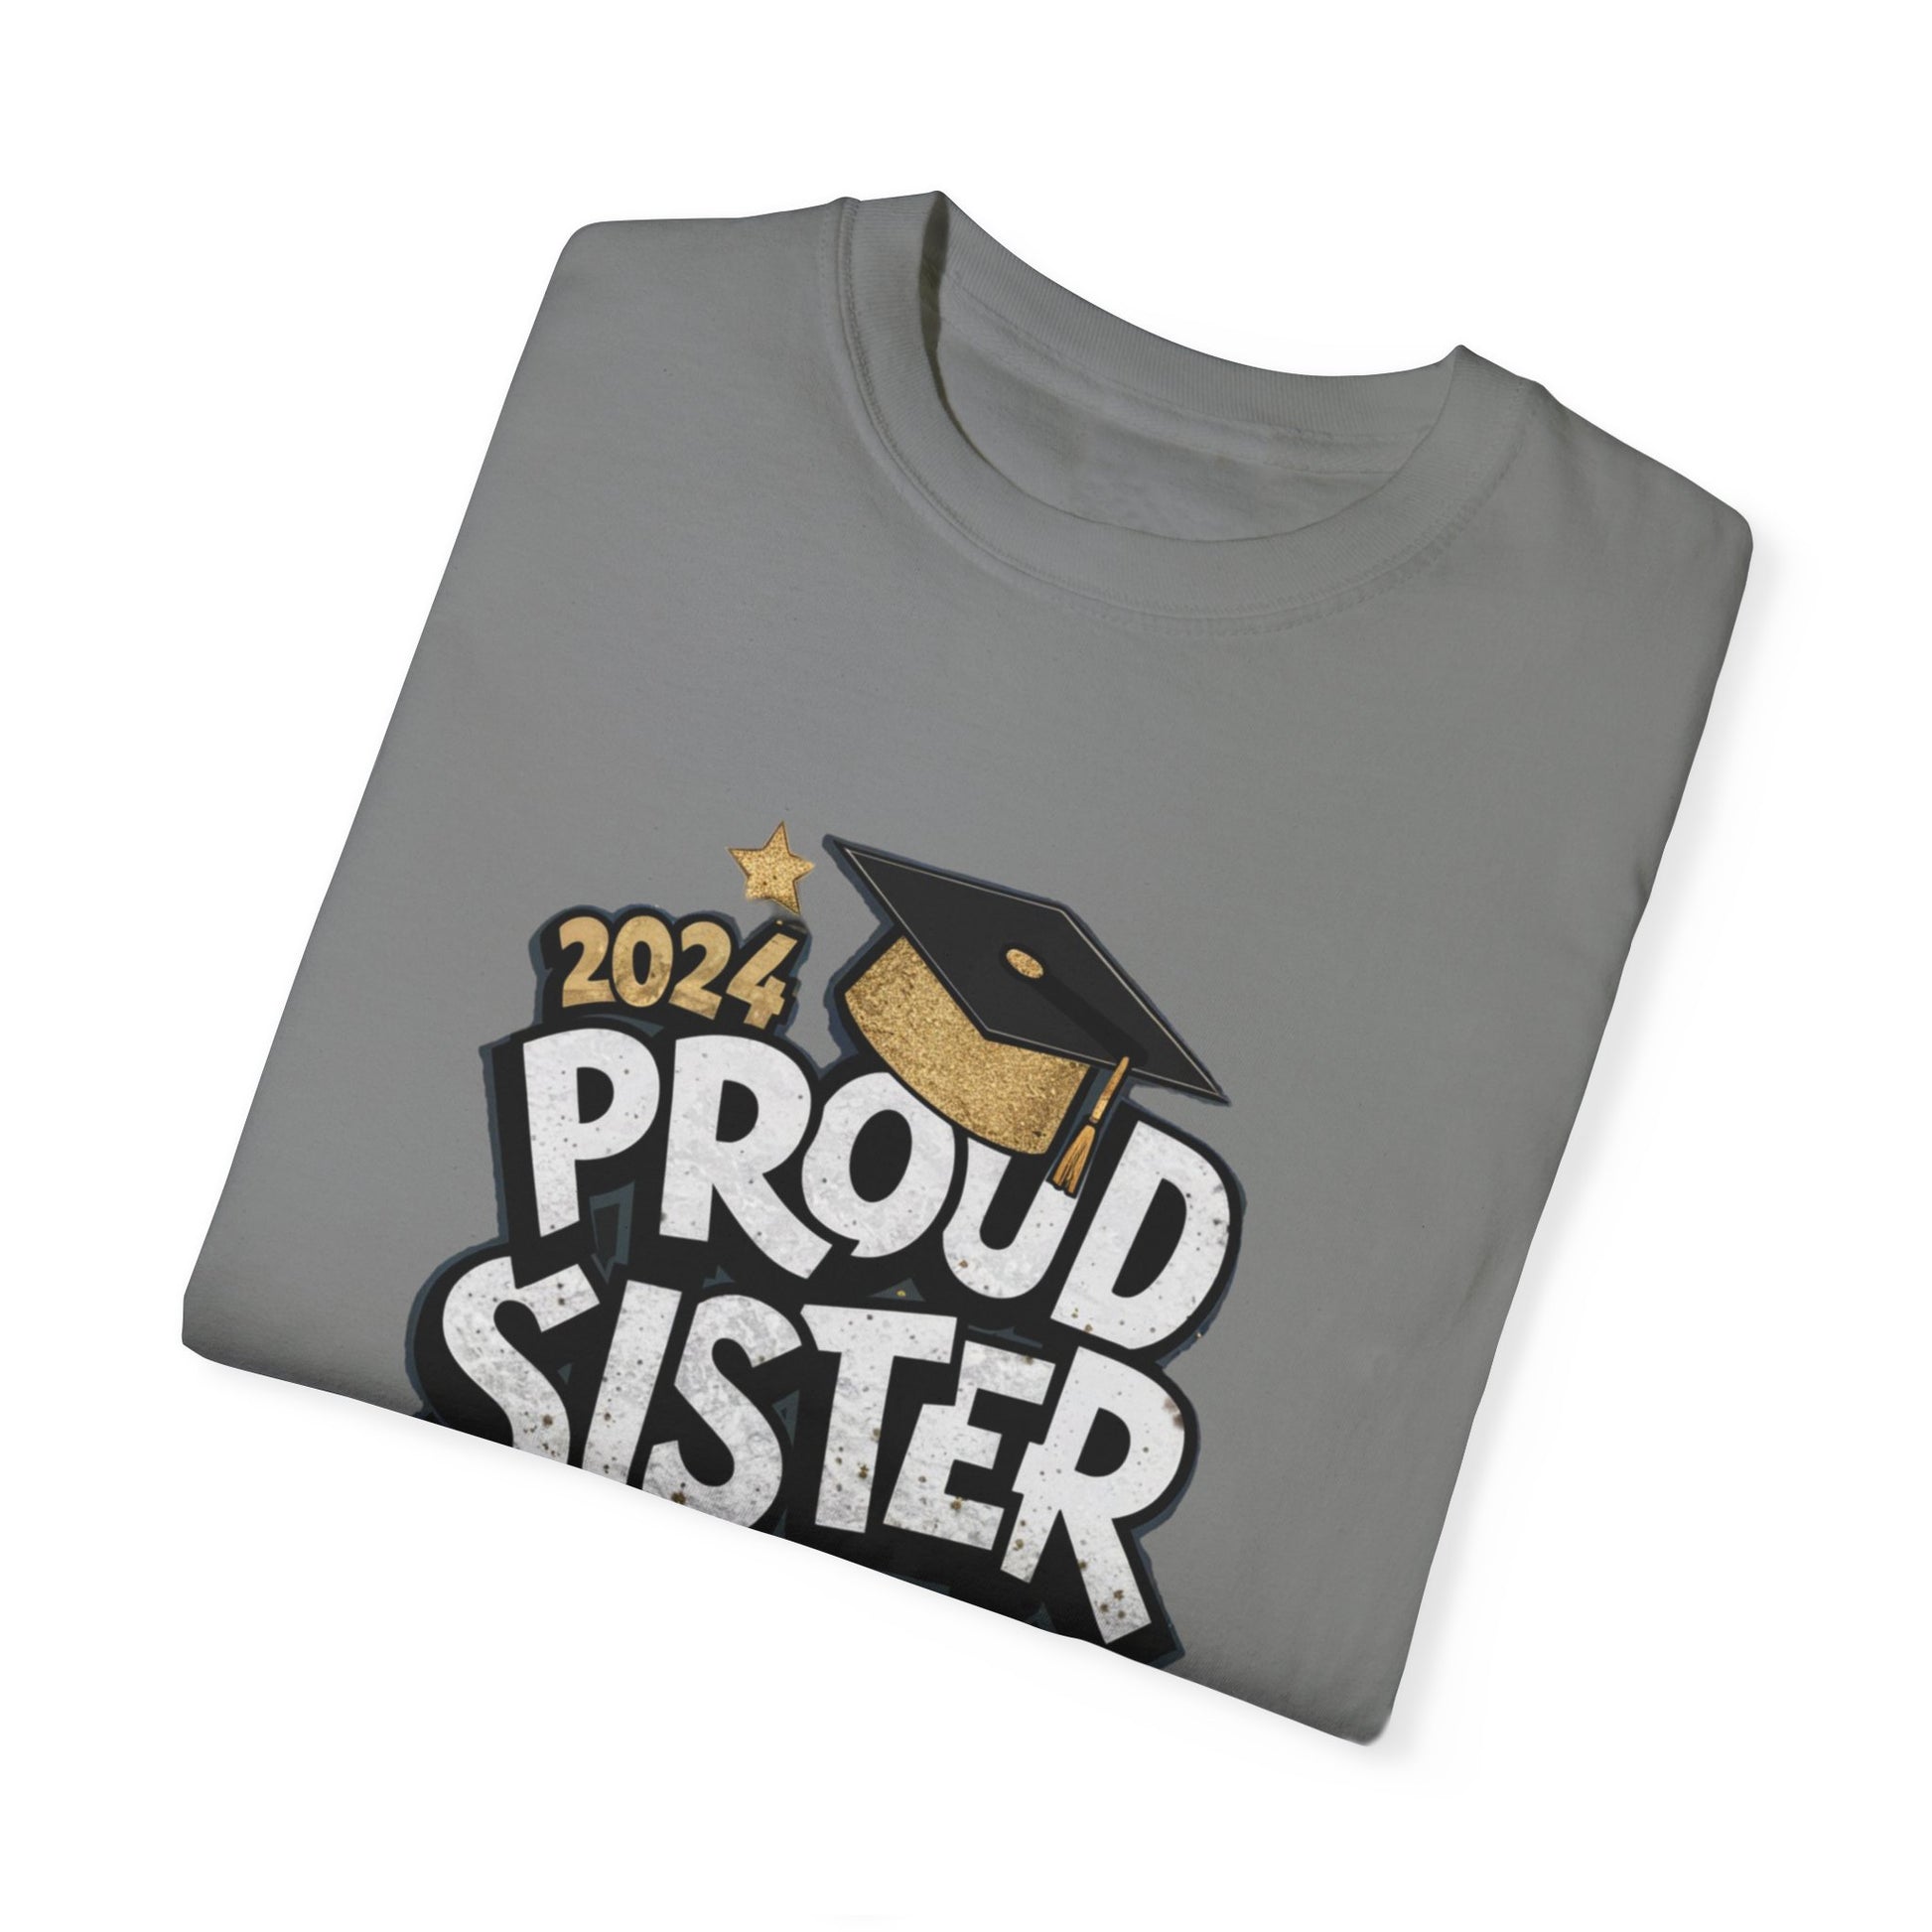 Proud Sister of a 2024 Graduate Unisex Garment-dyed T-shirt Cotton Funny Humorous Graphic Soft Premium Unisex Men Women Grey T-shirt Birthday Gift-41